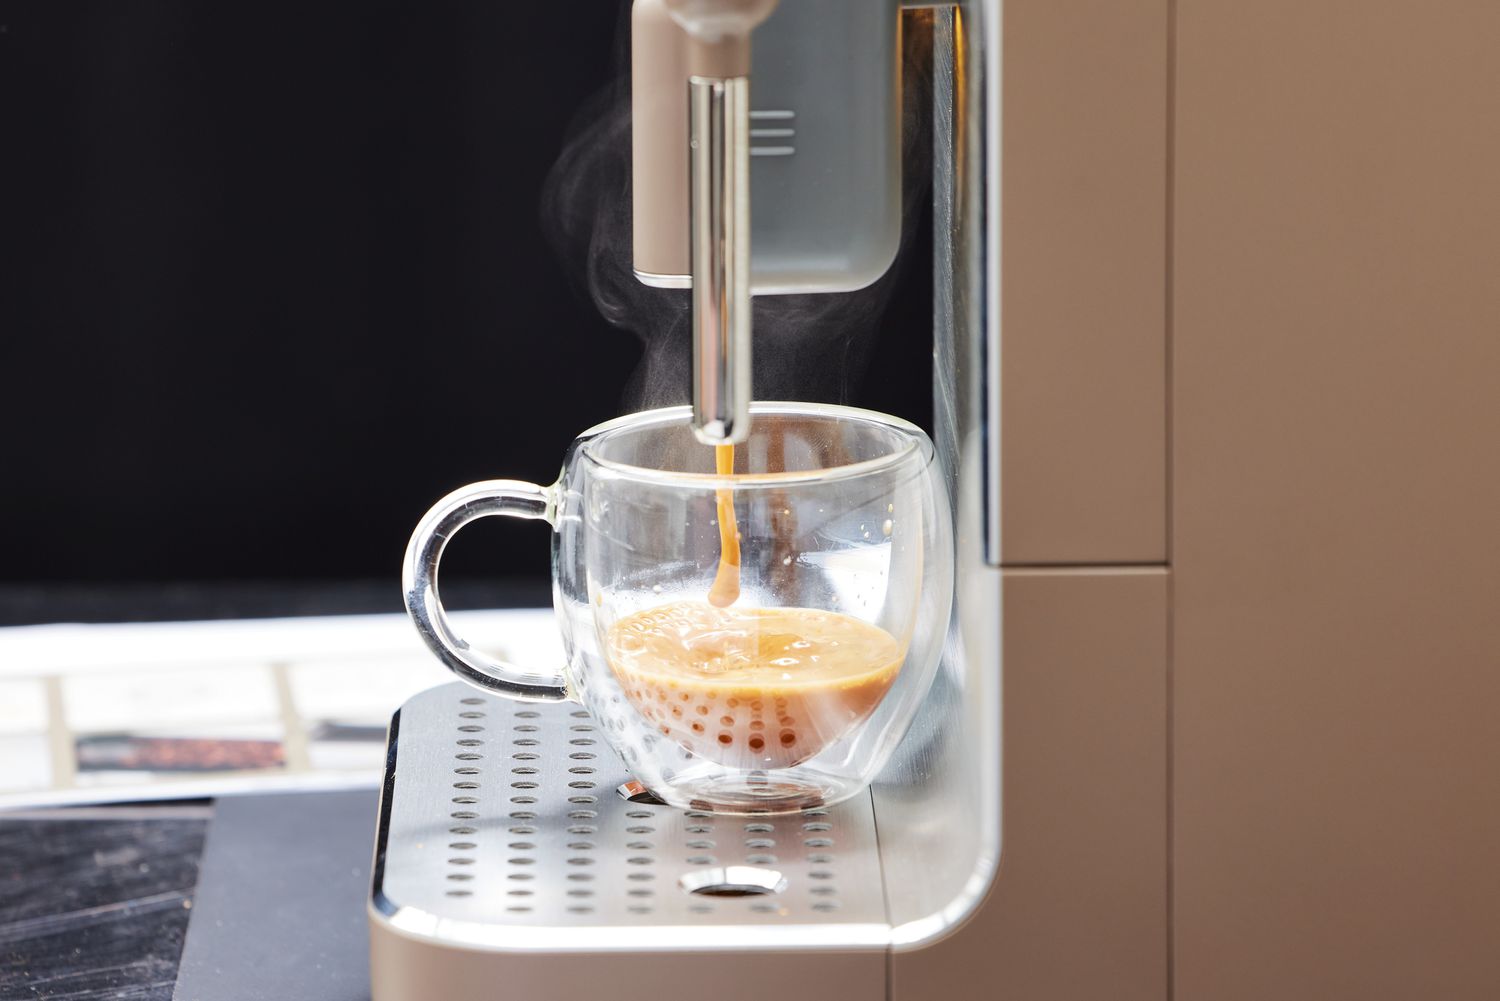 Espresso being brewed using the SMEG Medium Fully-Automatic Coffee Machine.